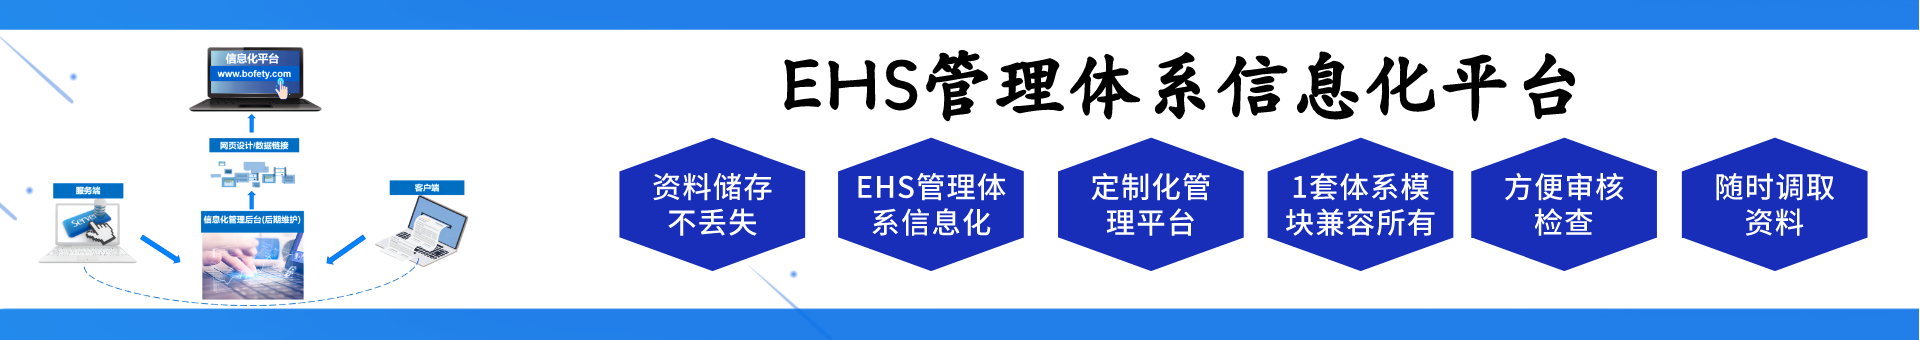 EHS数字化平台